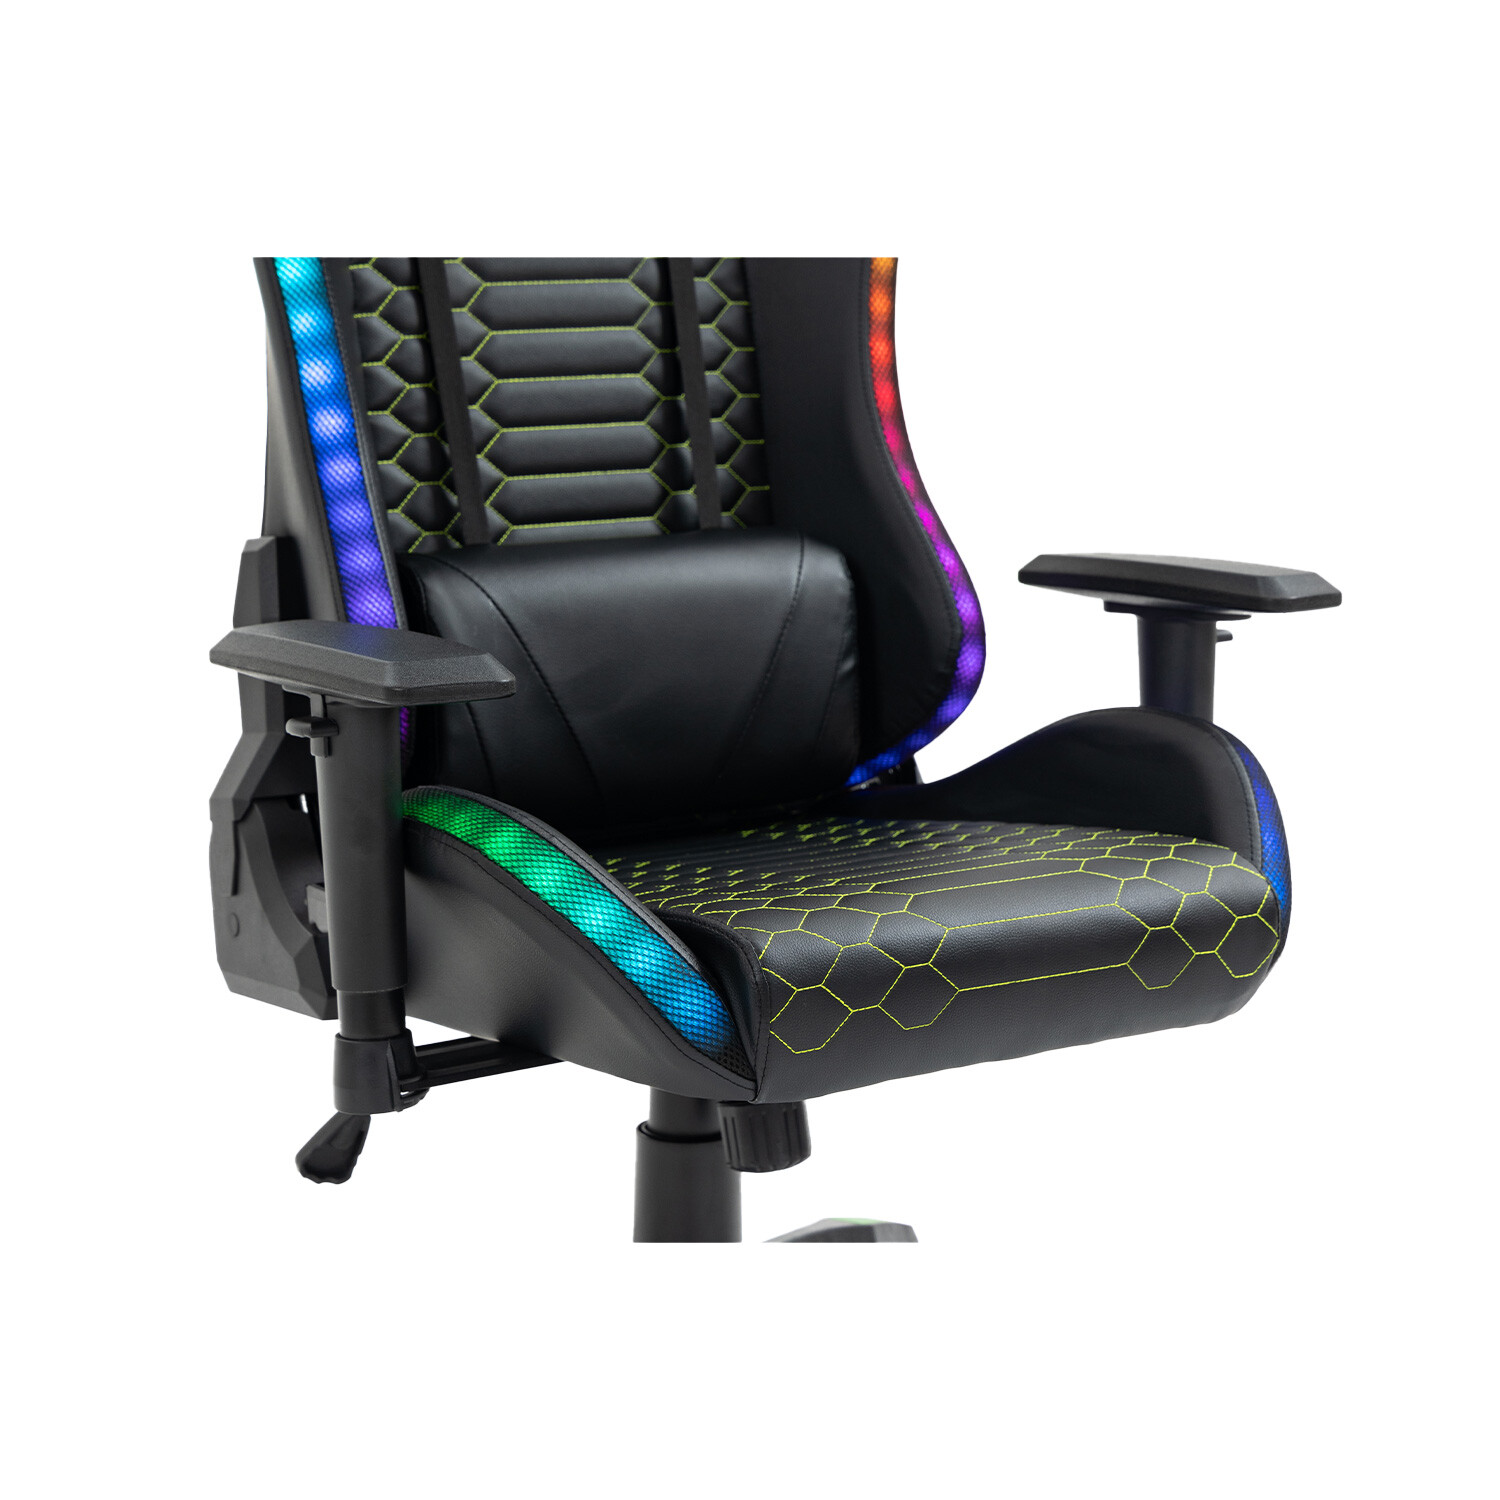 Triton LED Gaming Chair - Black Image 3